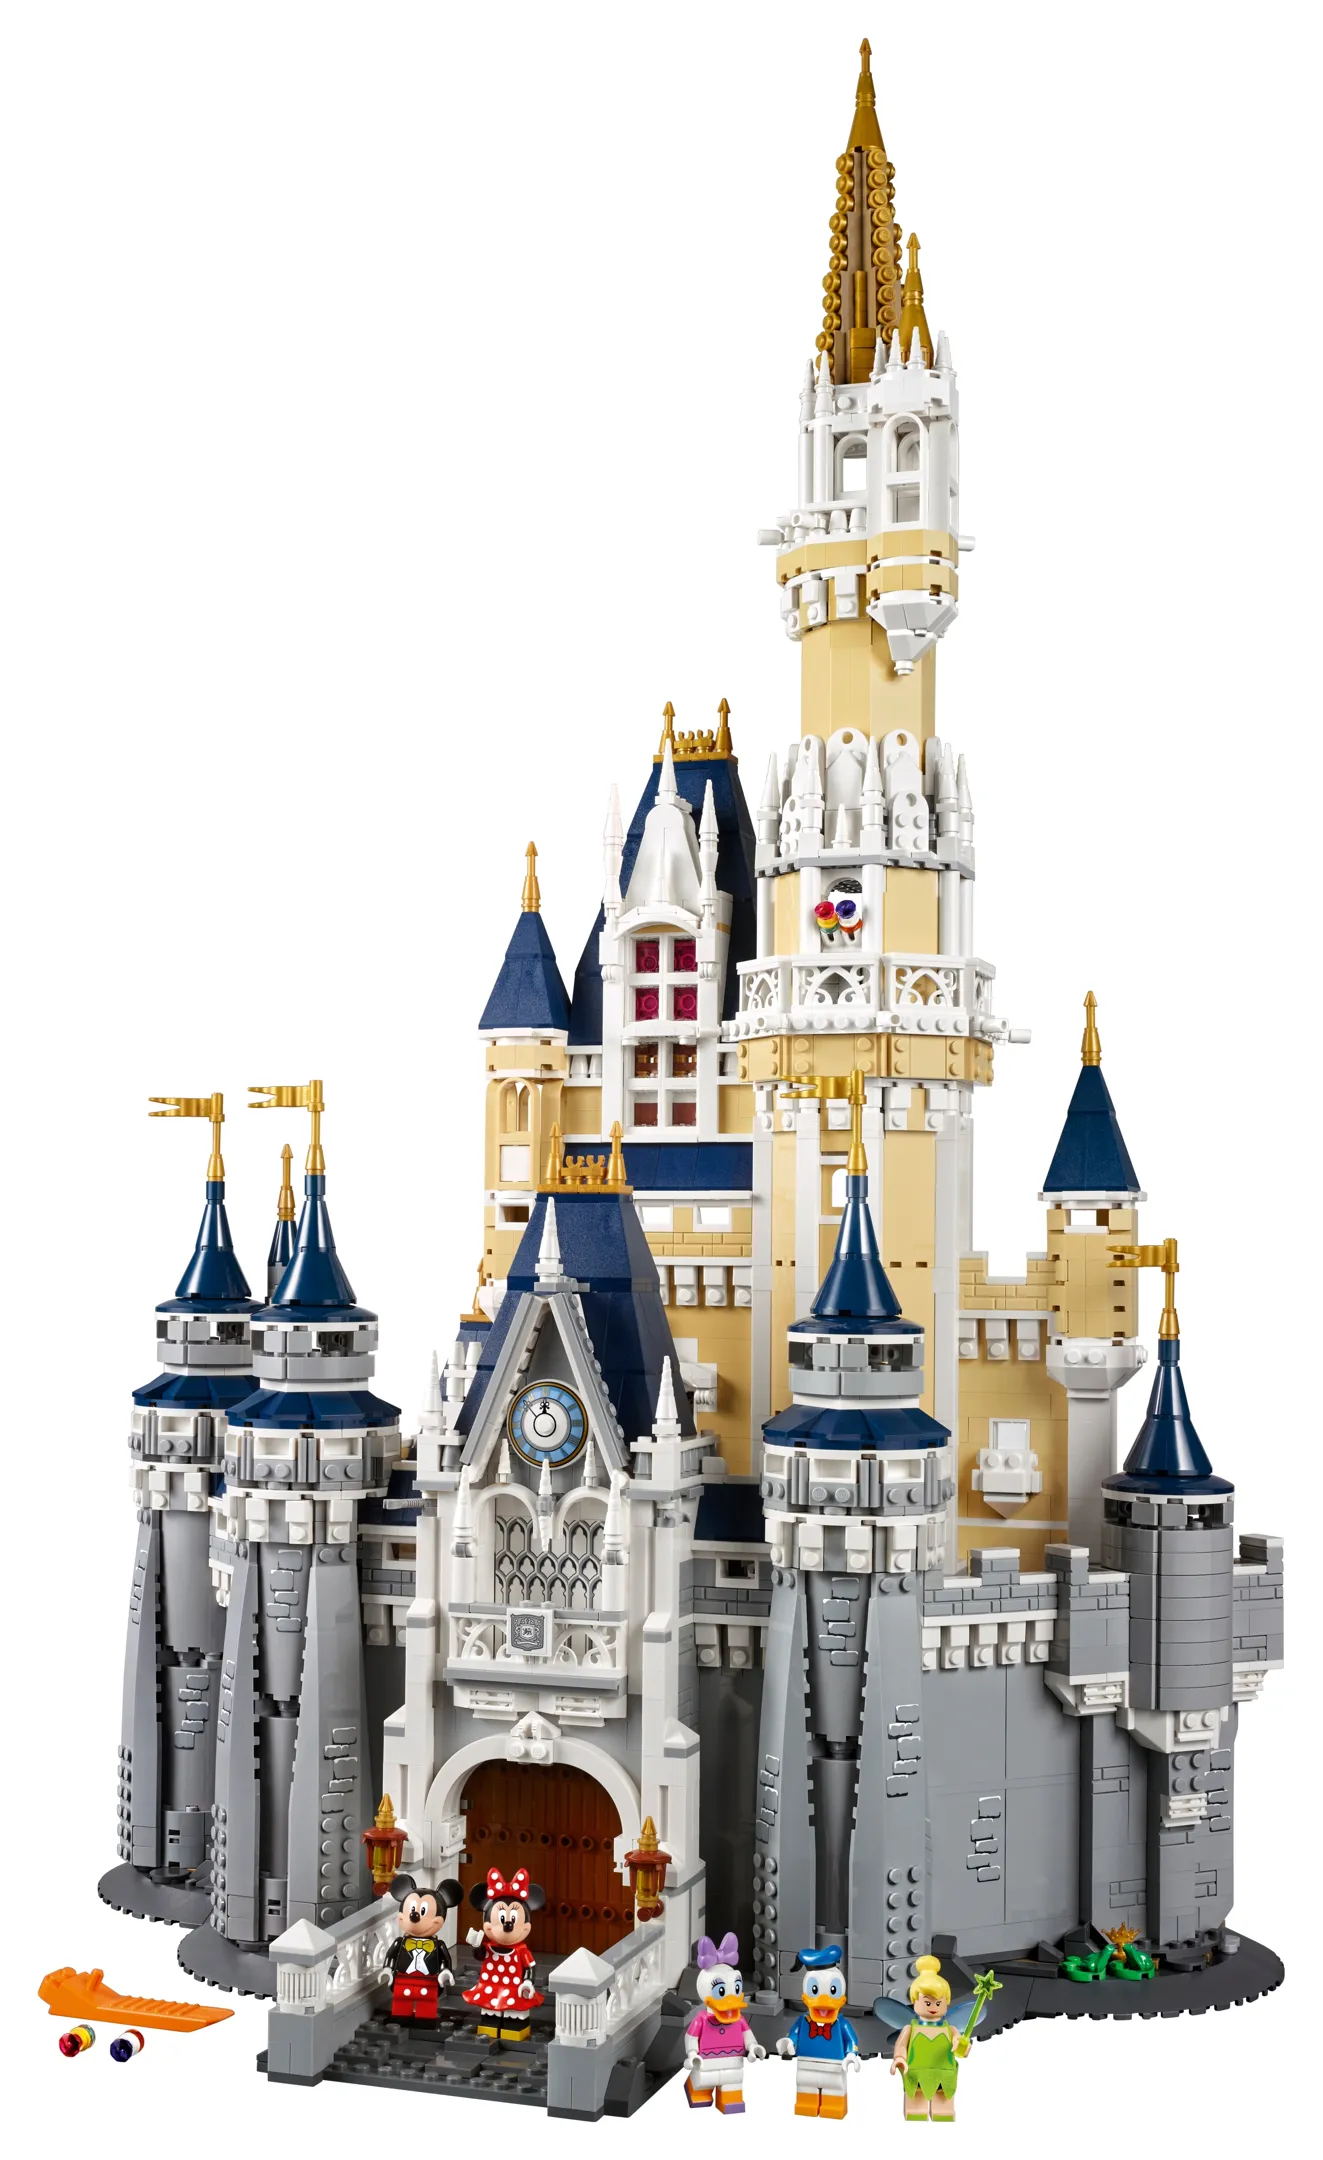 The Disney™ Castle Gallery